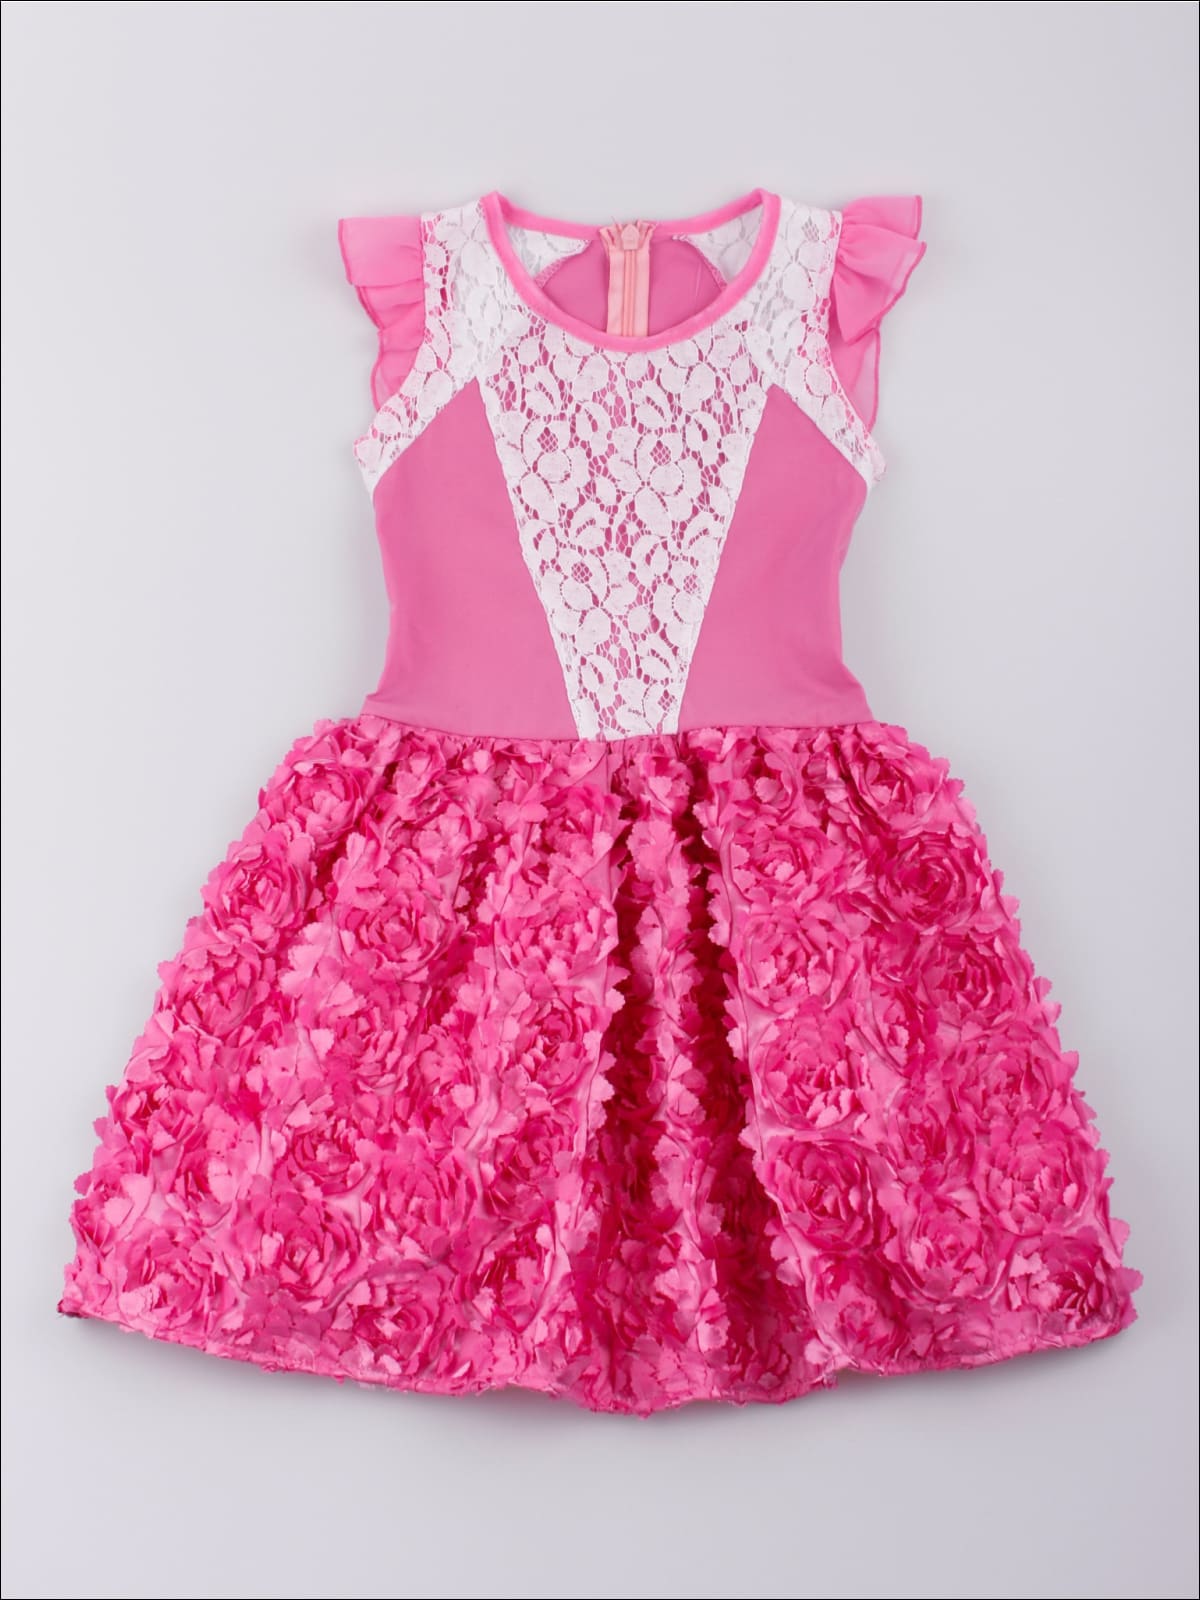 Girls Fuchsia Rosette Dress with Delicate Trim - Girls Spring Casual Dress